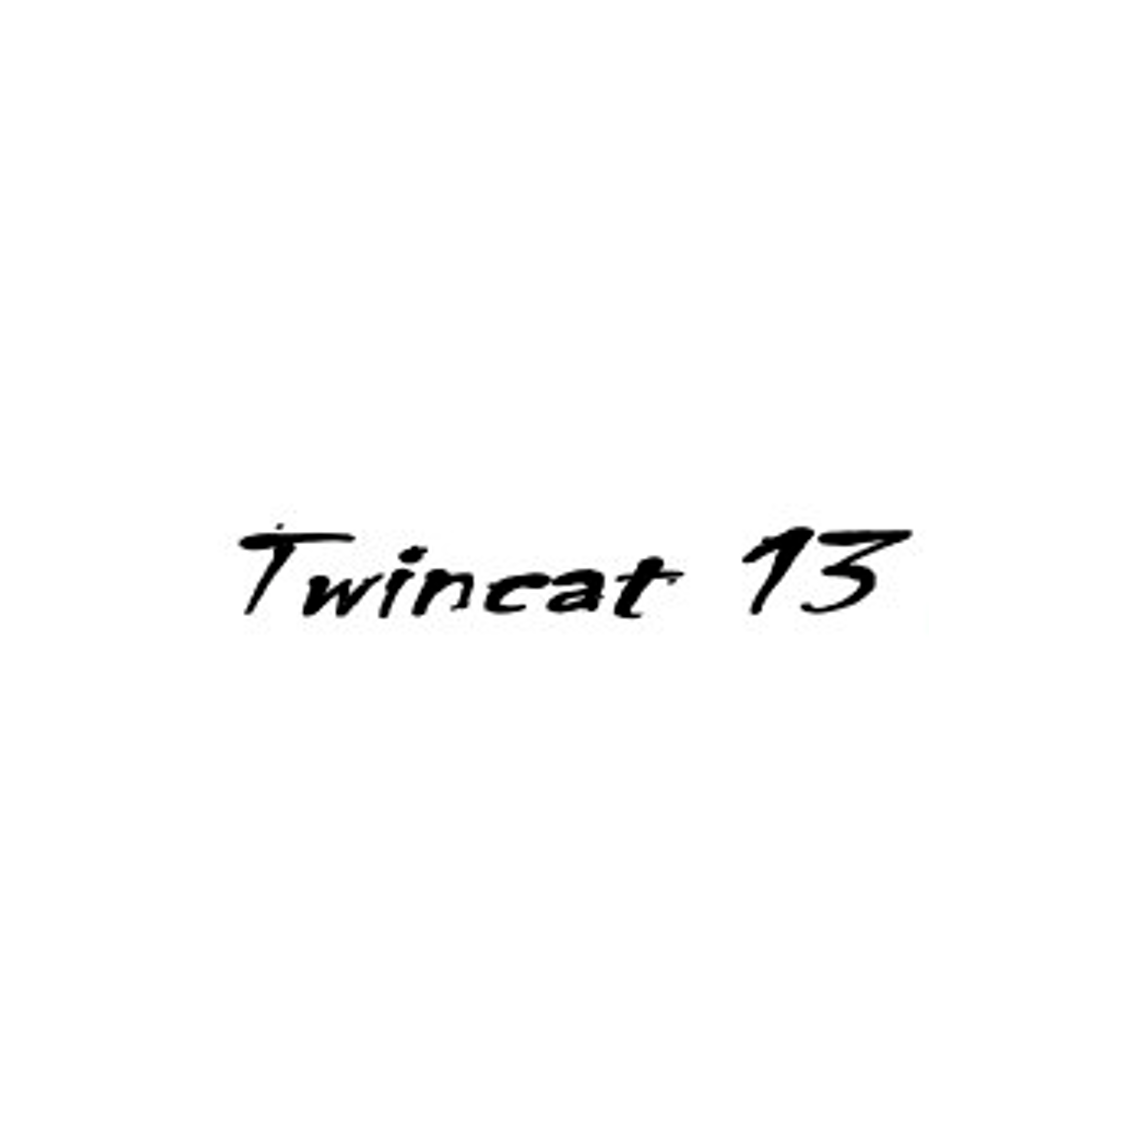 Twincat 13